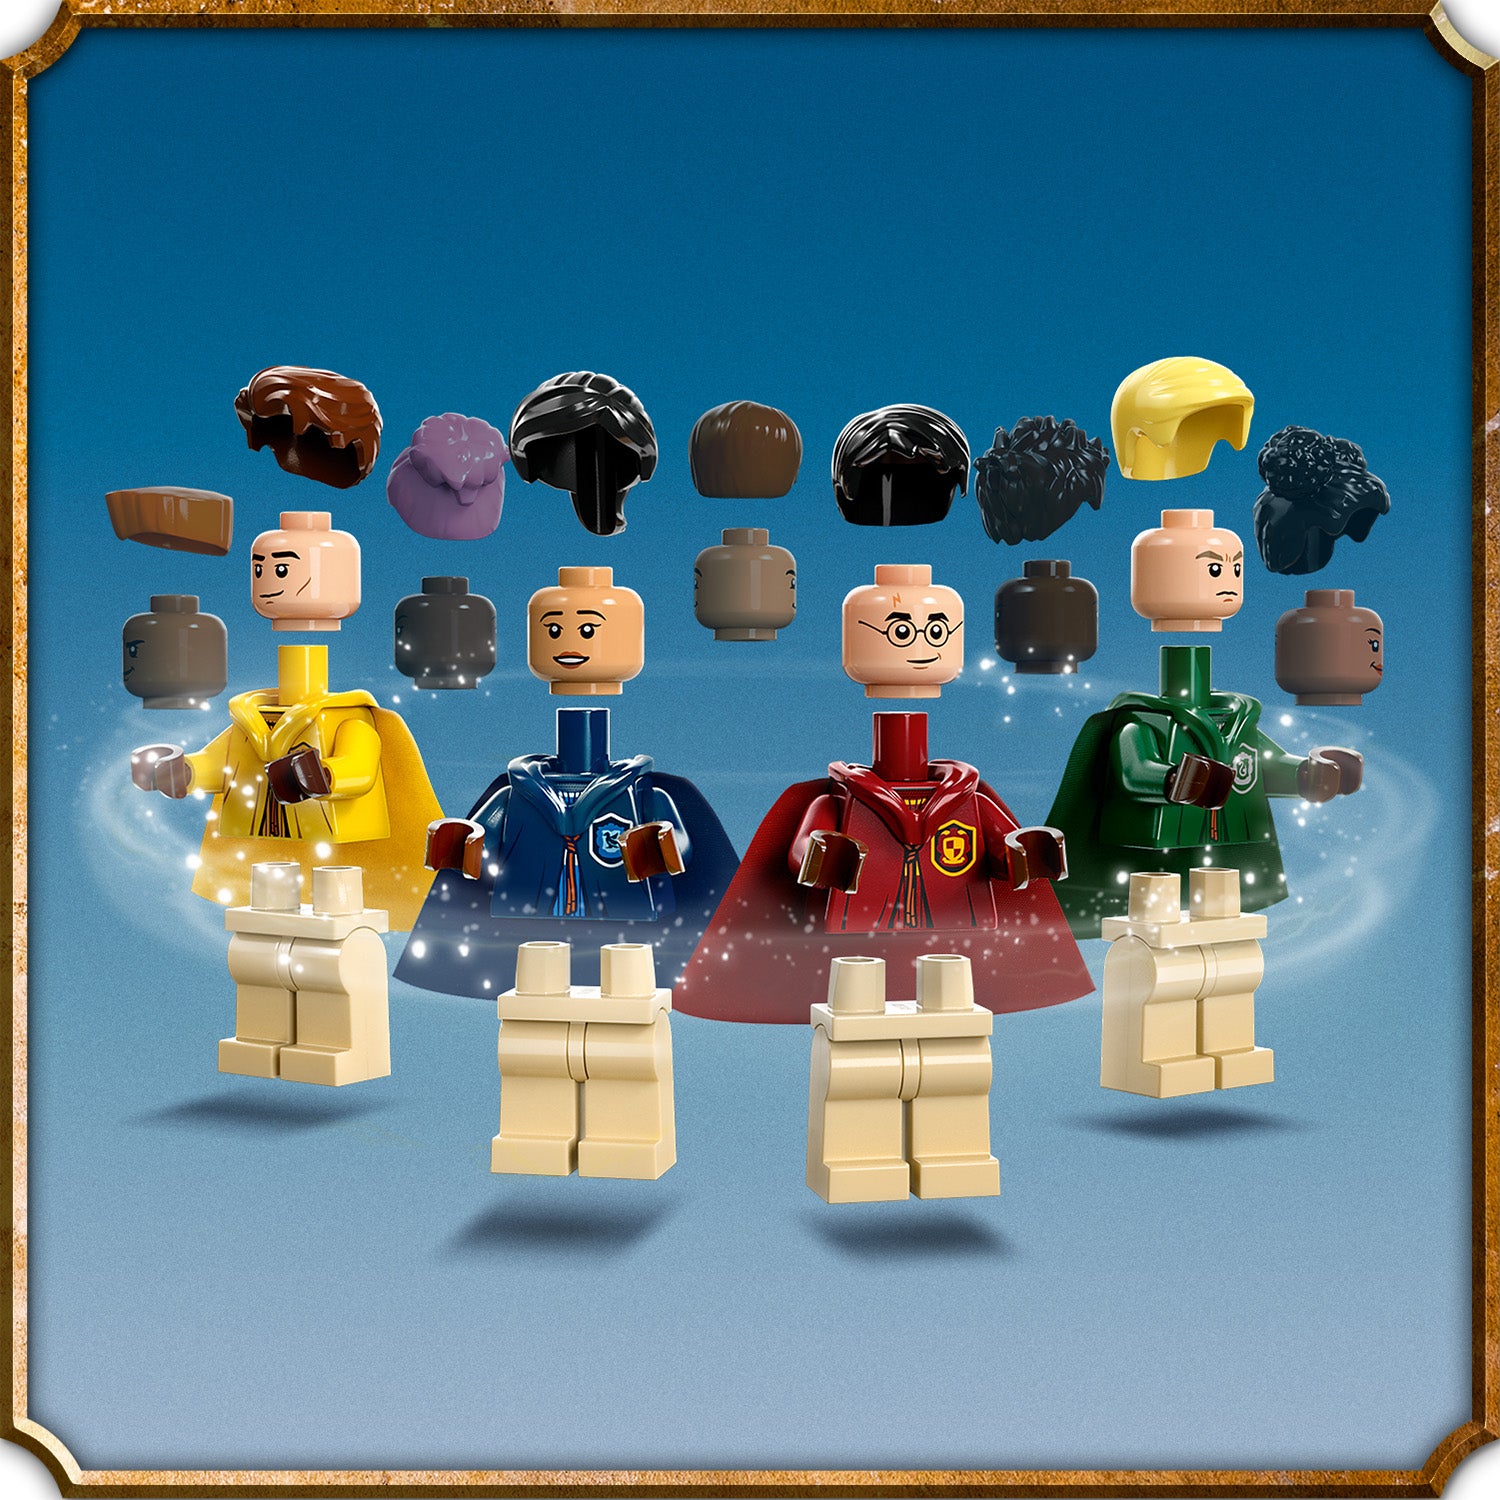 Lego 76416 Quidditch Trunk